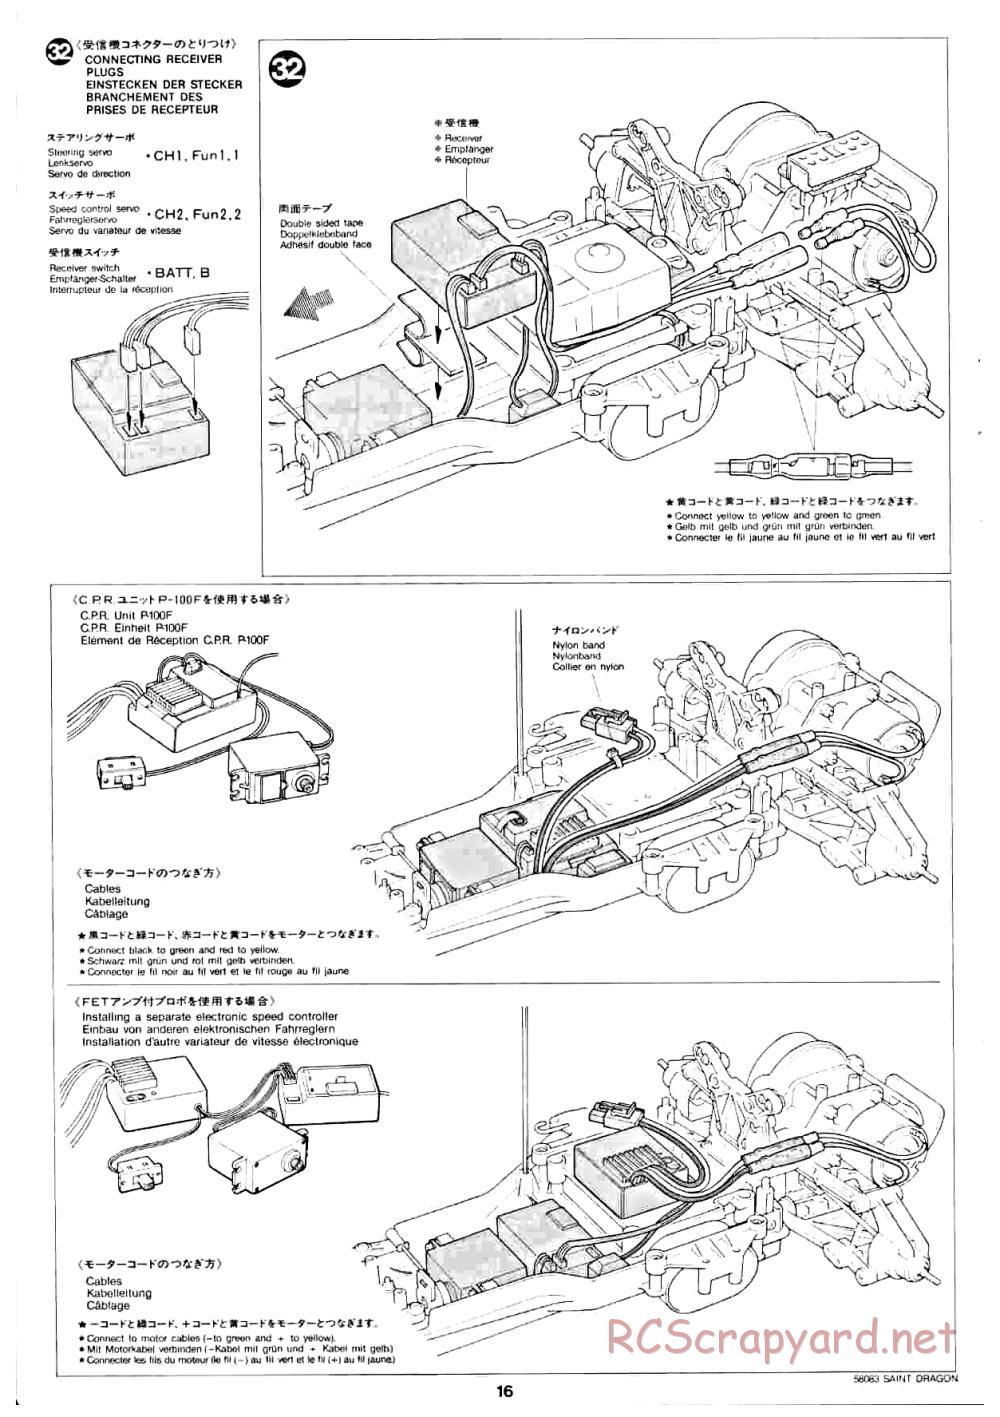 Tamiya - Saint Dragon - 58083 - Manual - Page 16